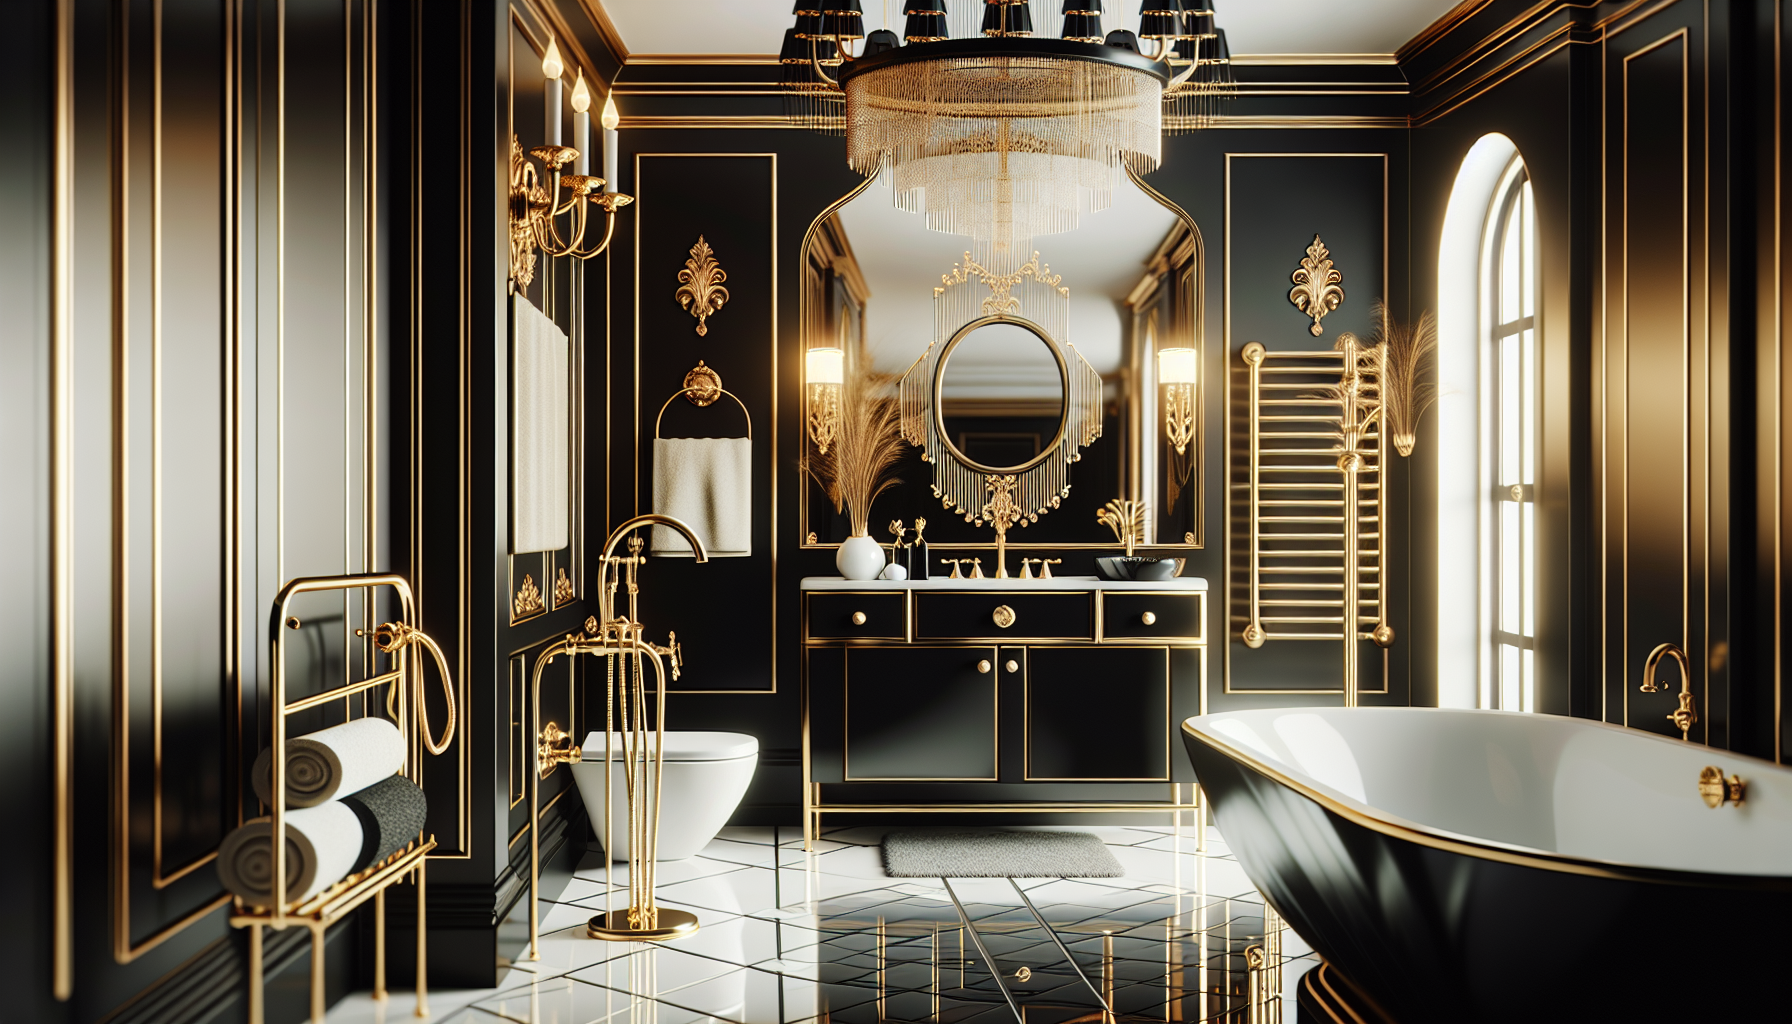 Luxuriöse schwarze Badezimmerarmaturen in Kombination mit goldenen Akzenten